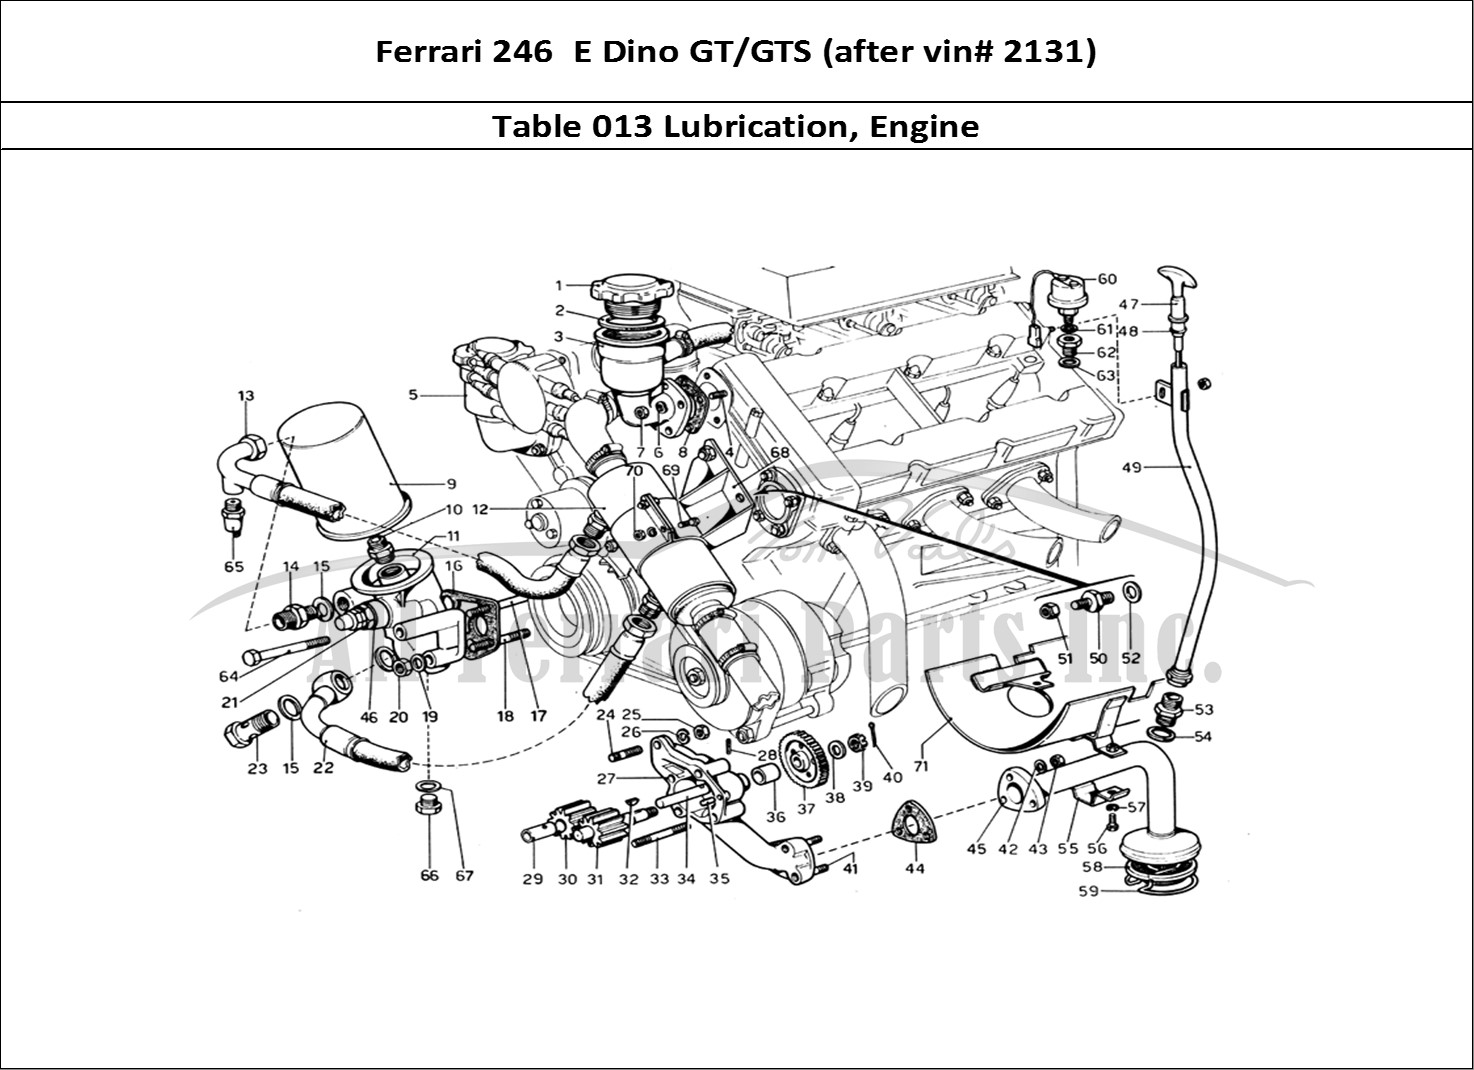 Ferrari Parts Ferrari 246 Dino (1975) Page 013 Engine Lubrication